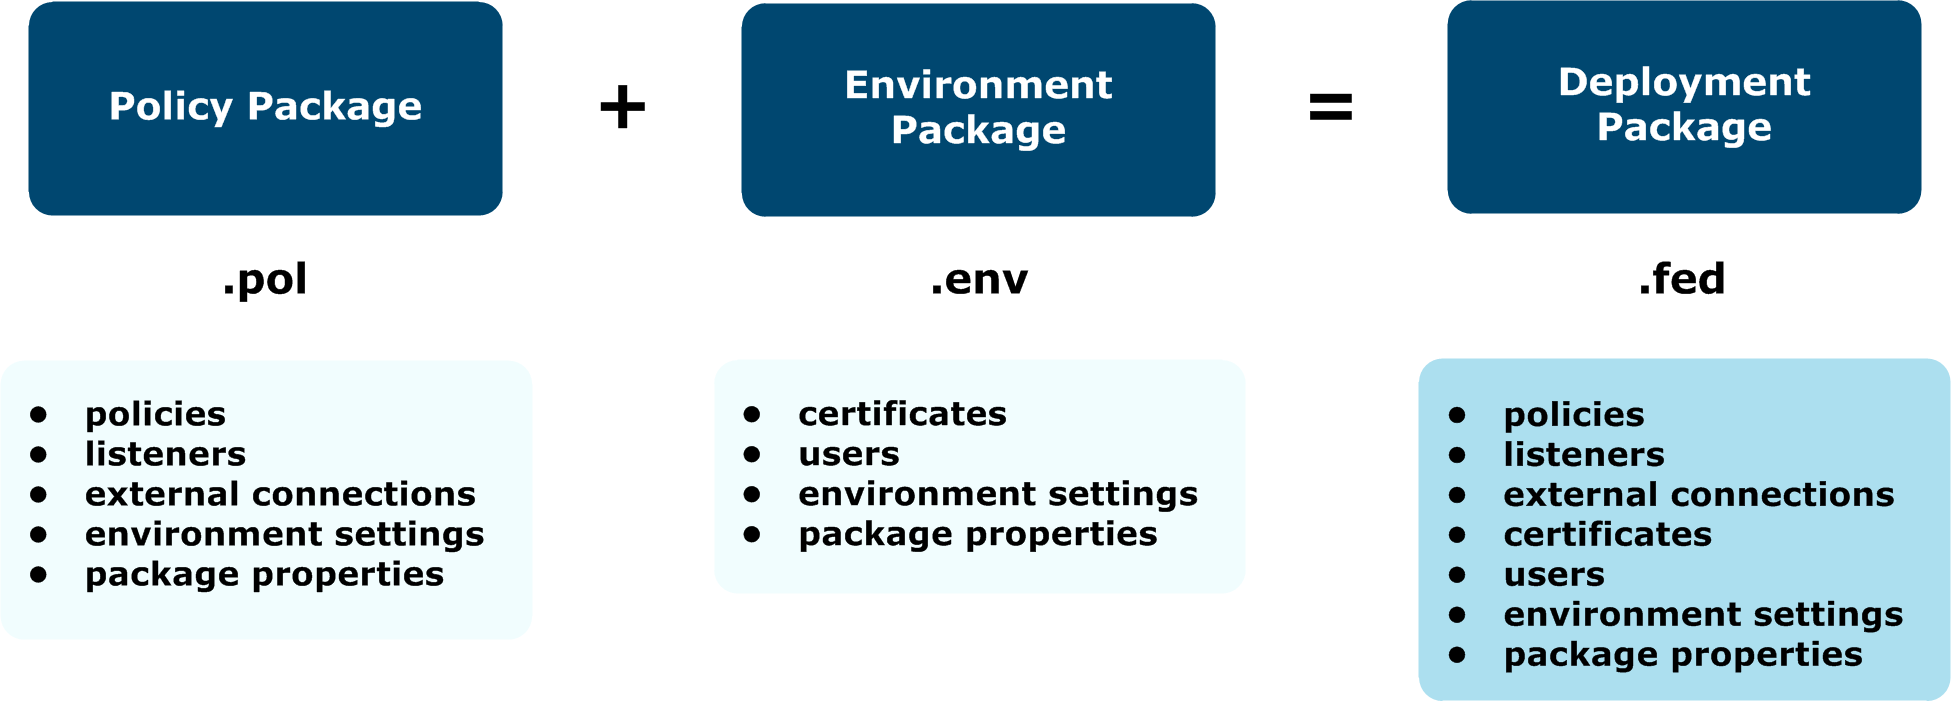 API Gateway configuration packages